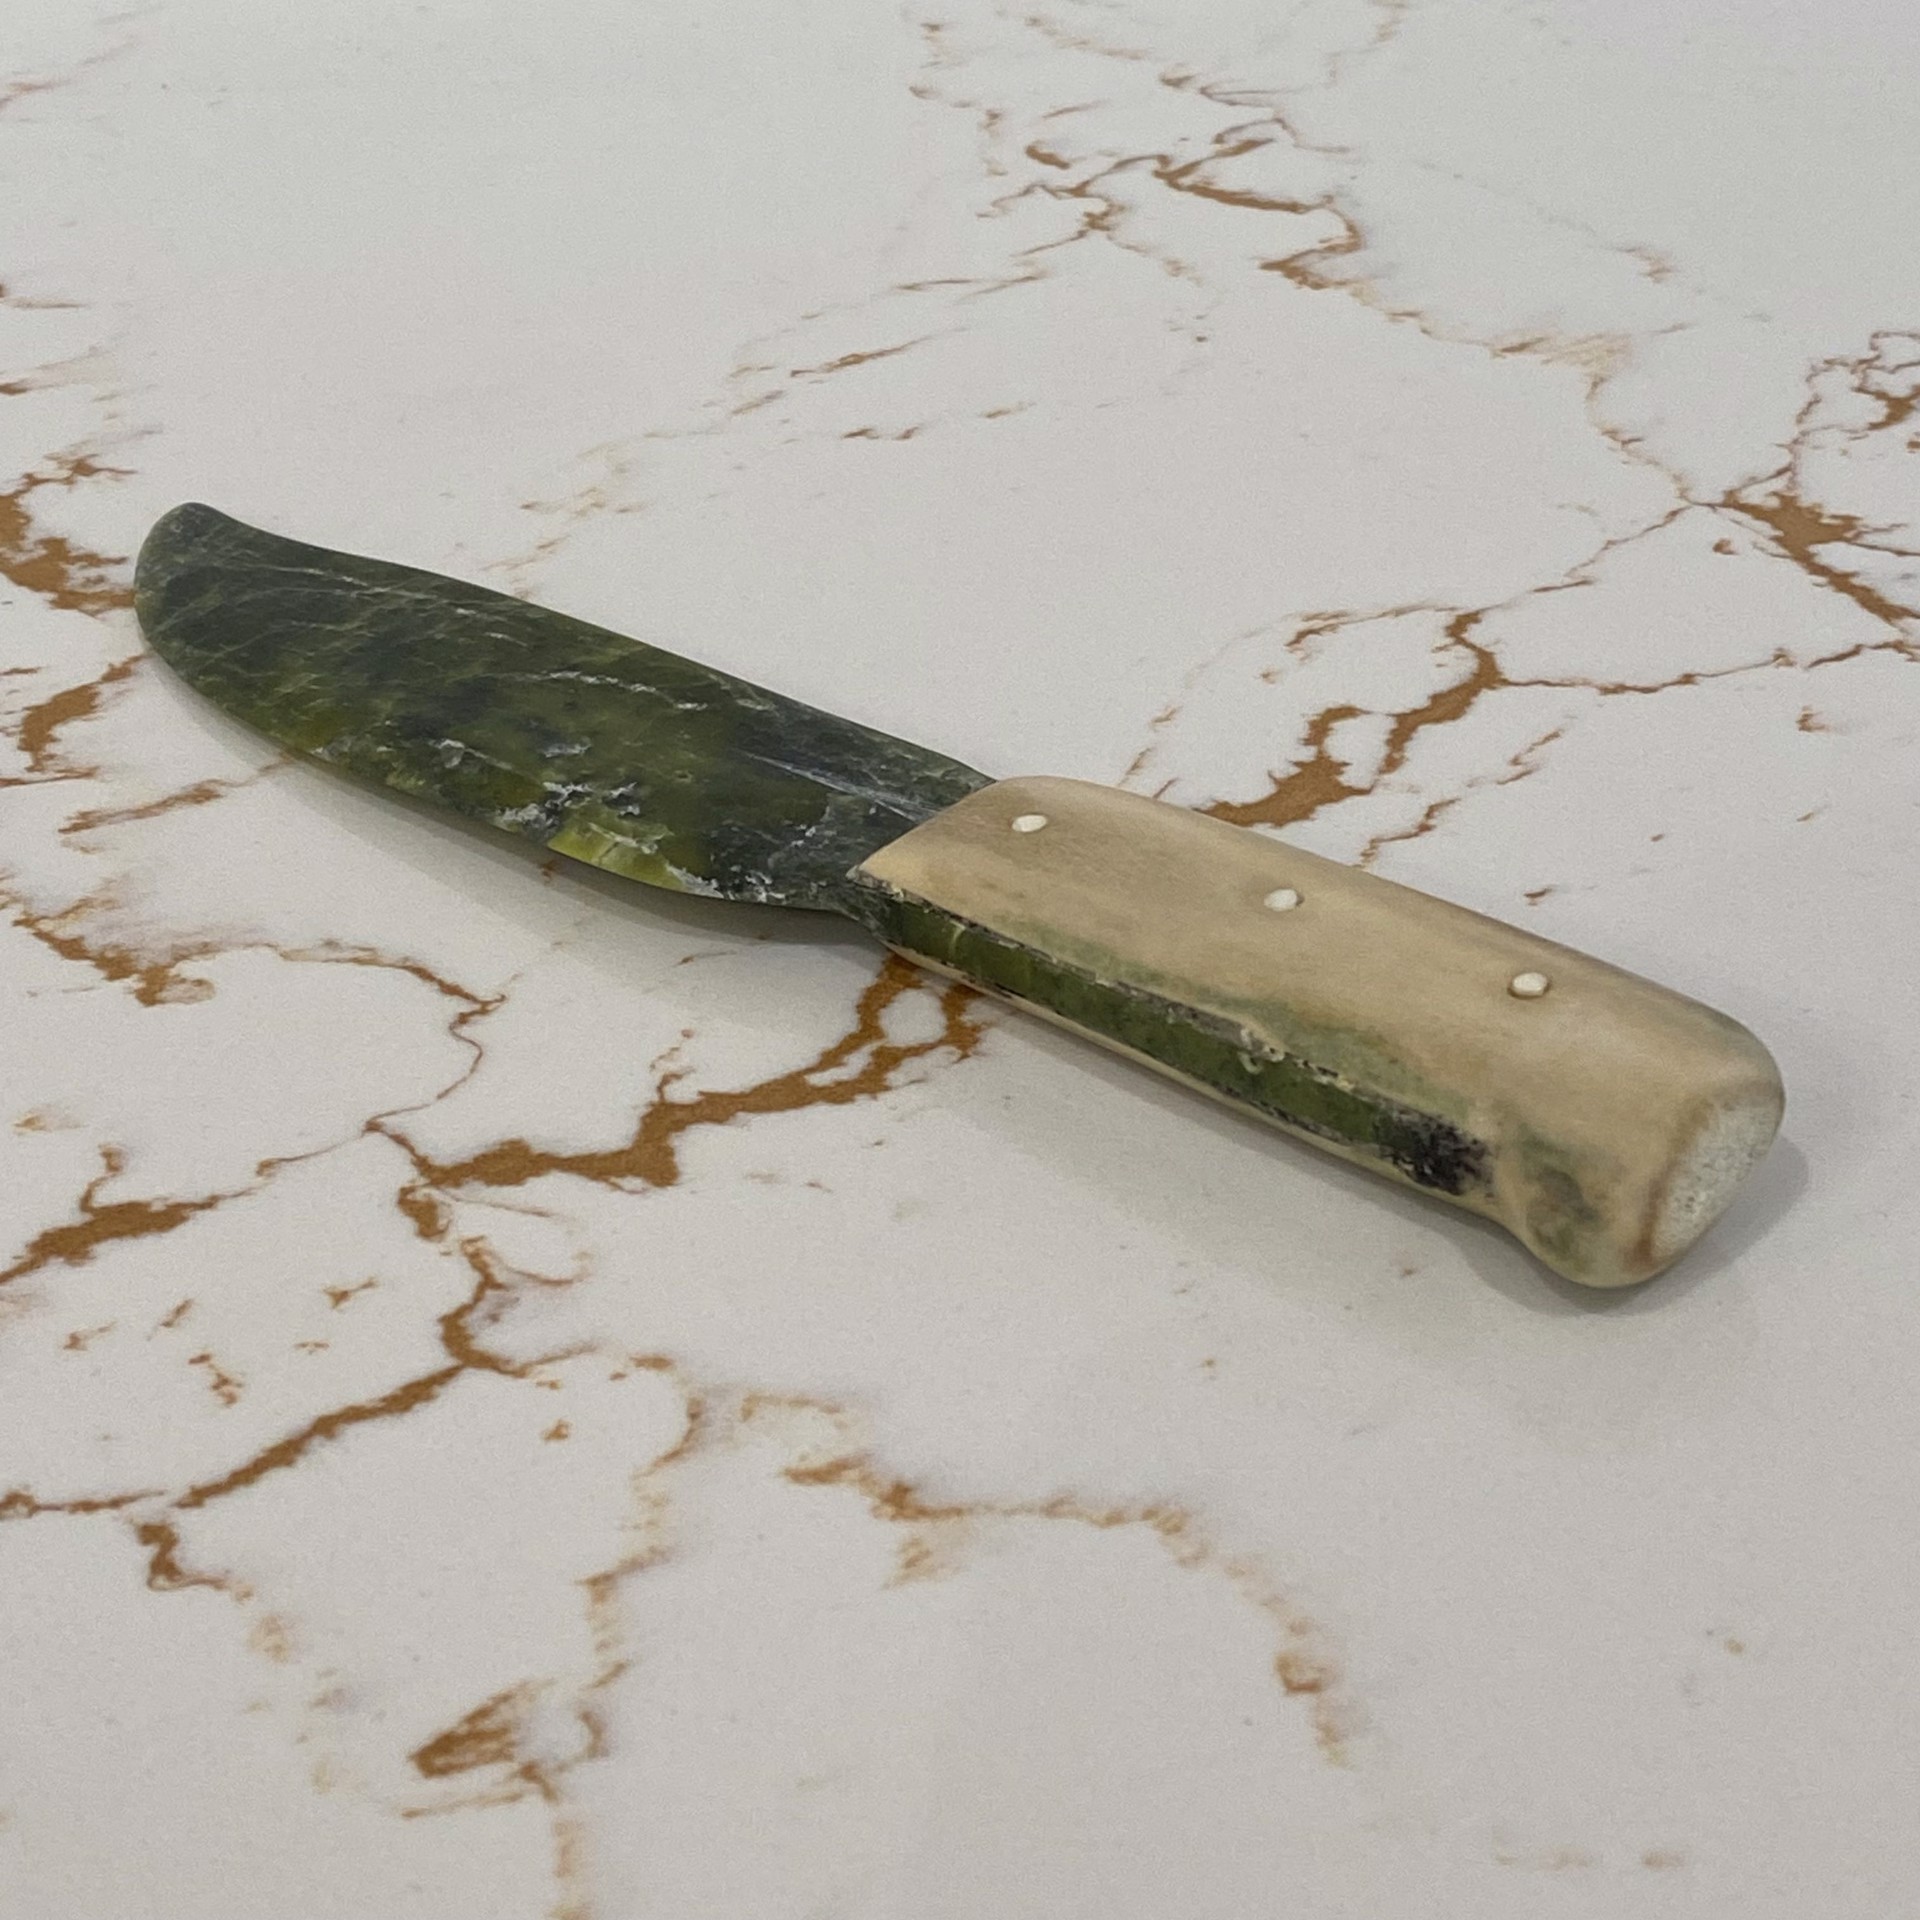 Knife by Mesut Celebi